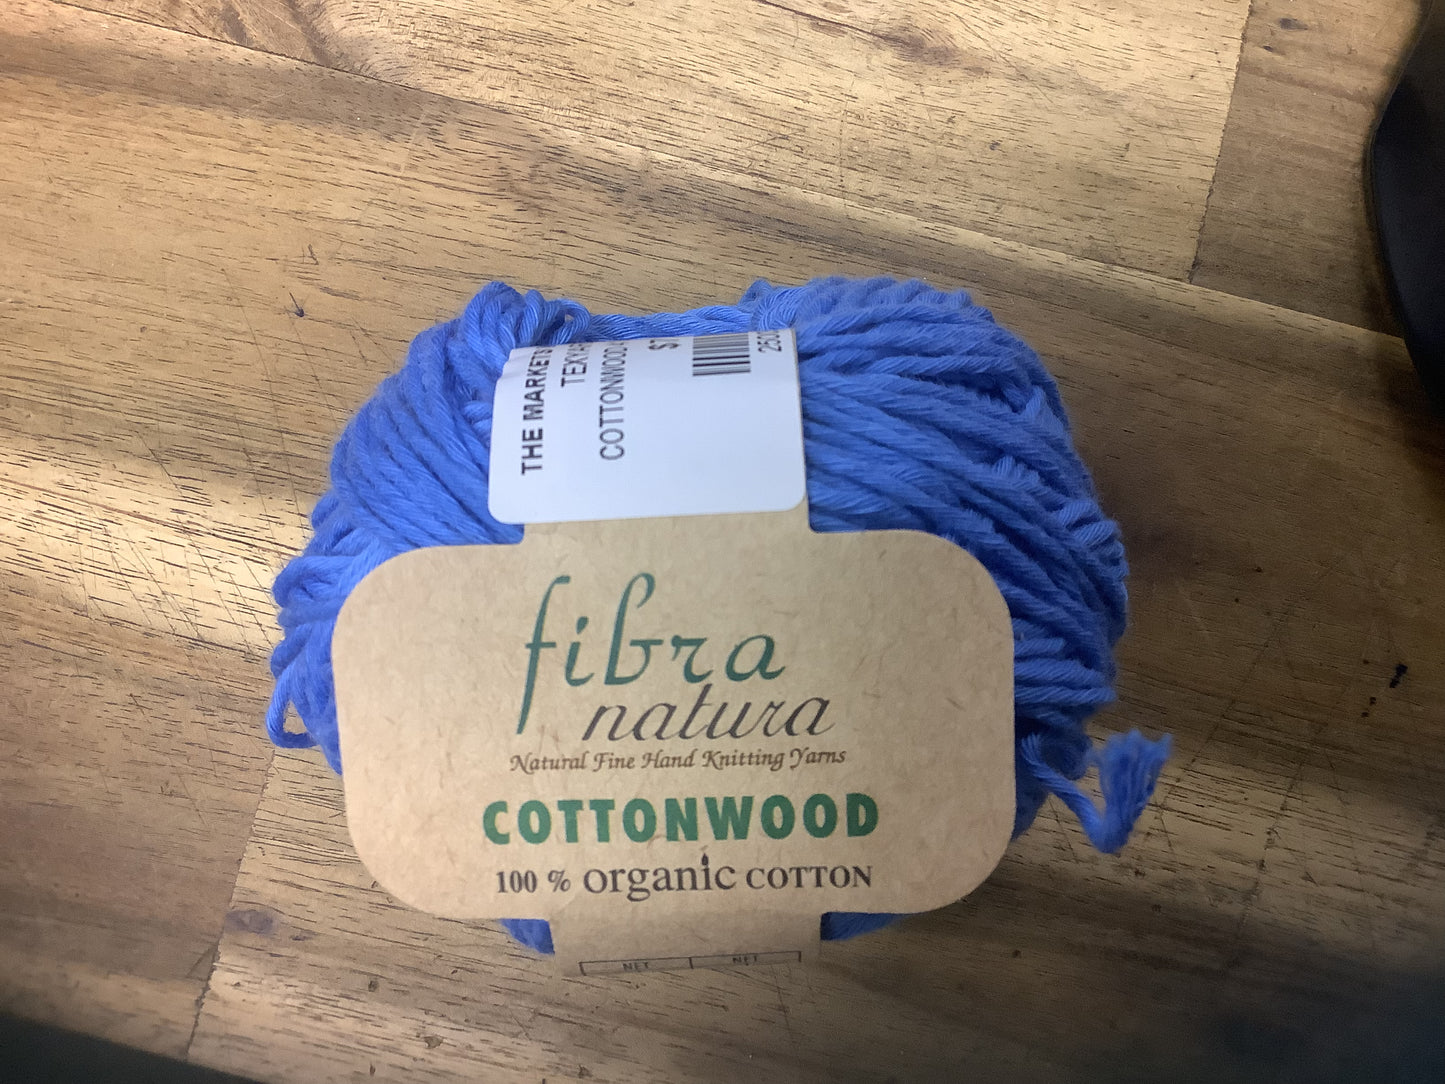 Fibra Natura Cottonwood